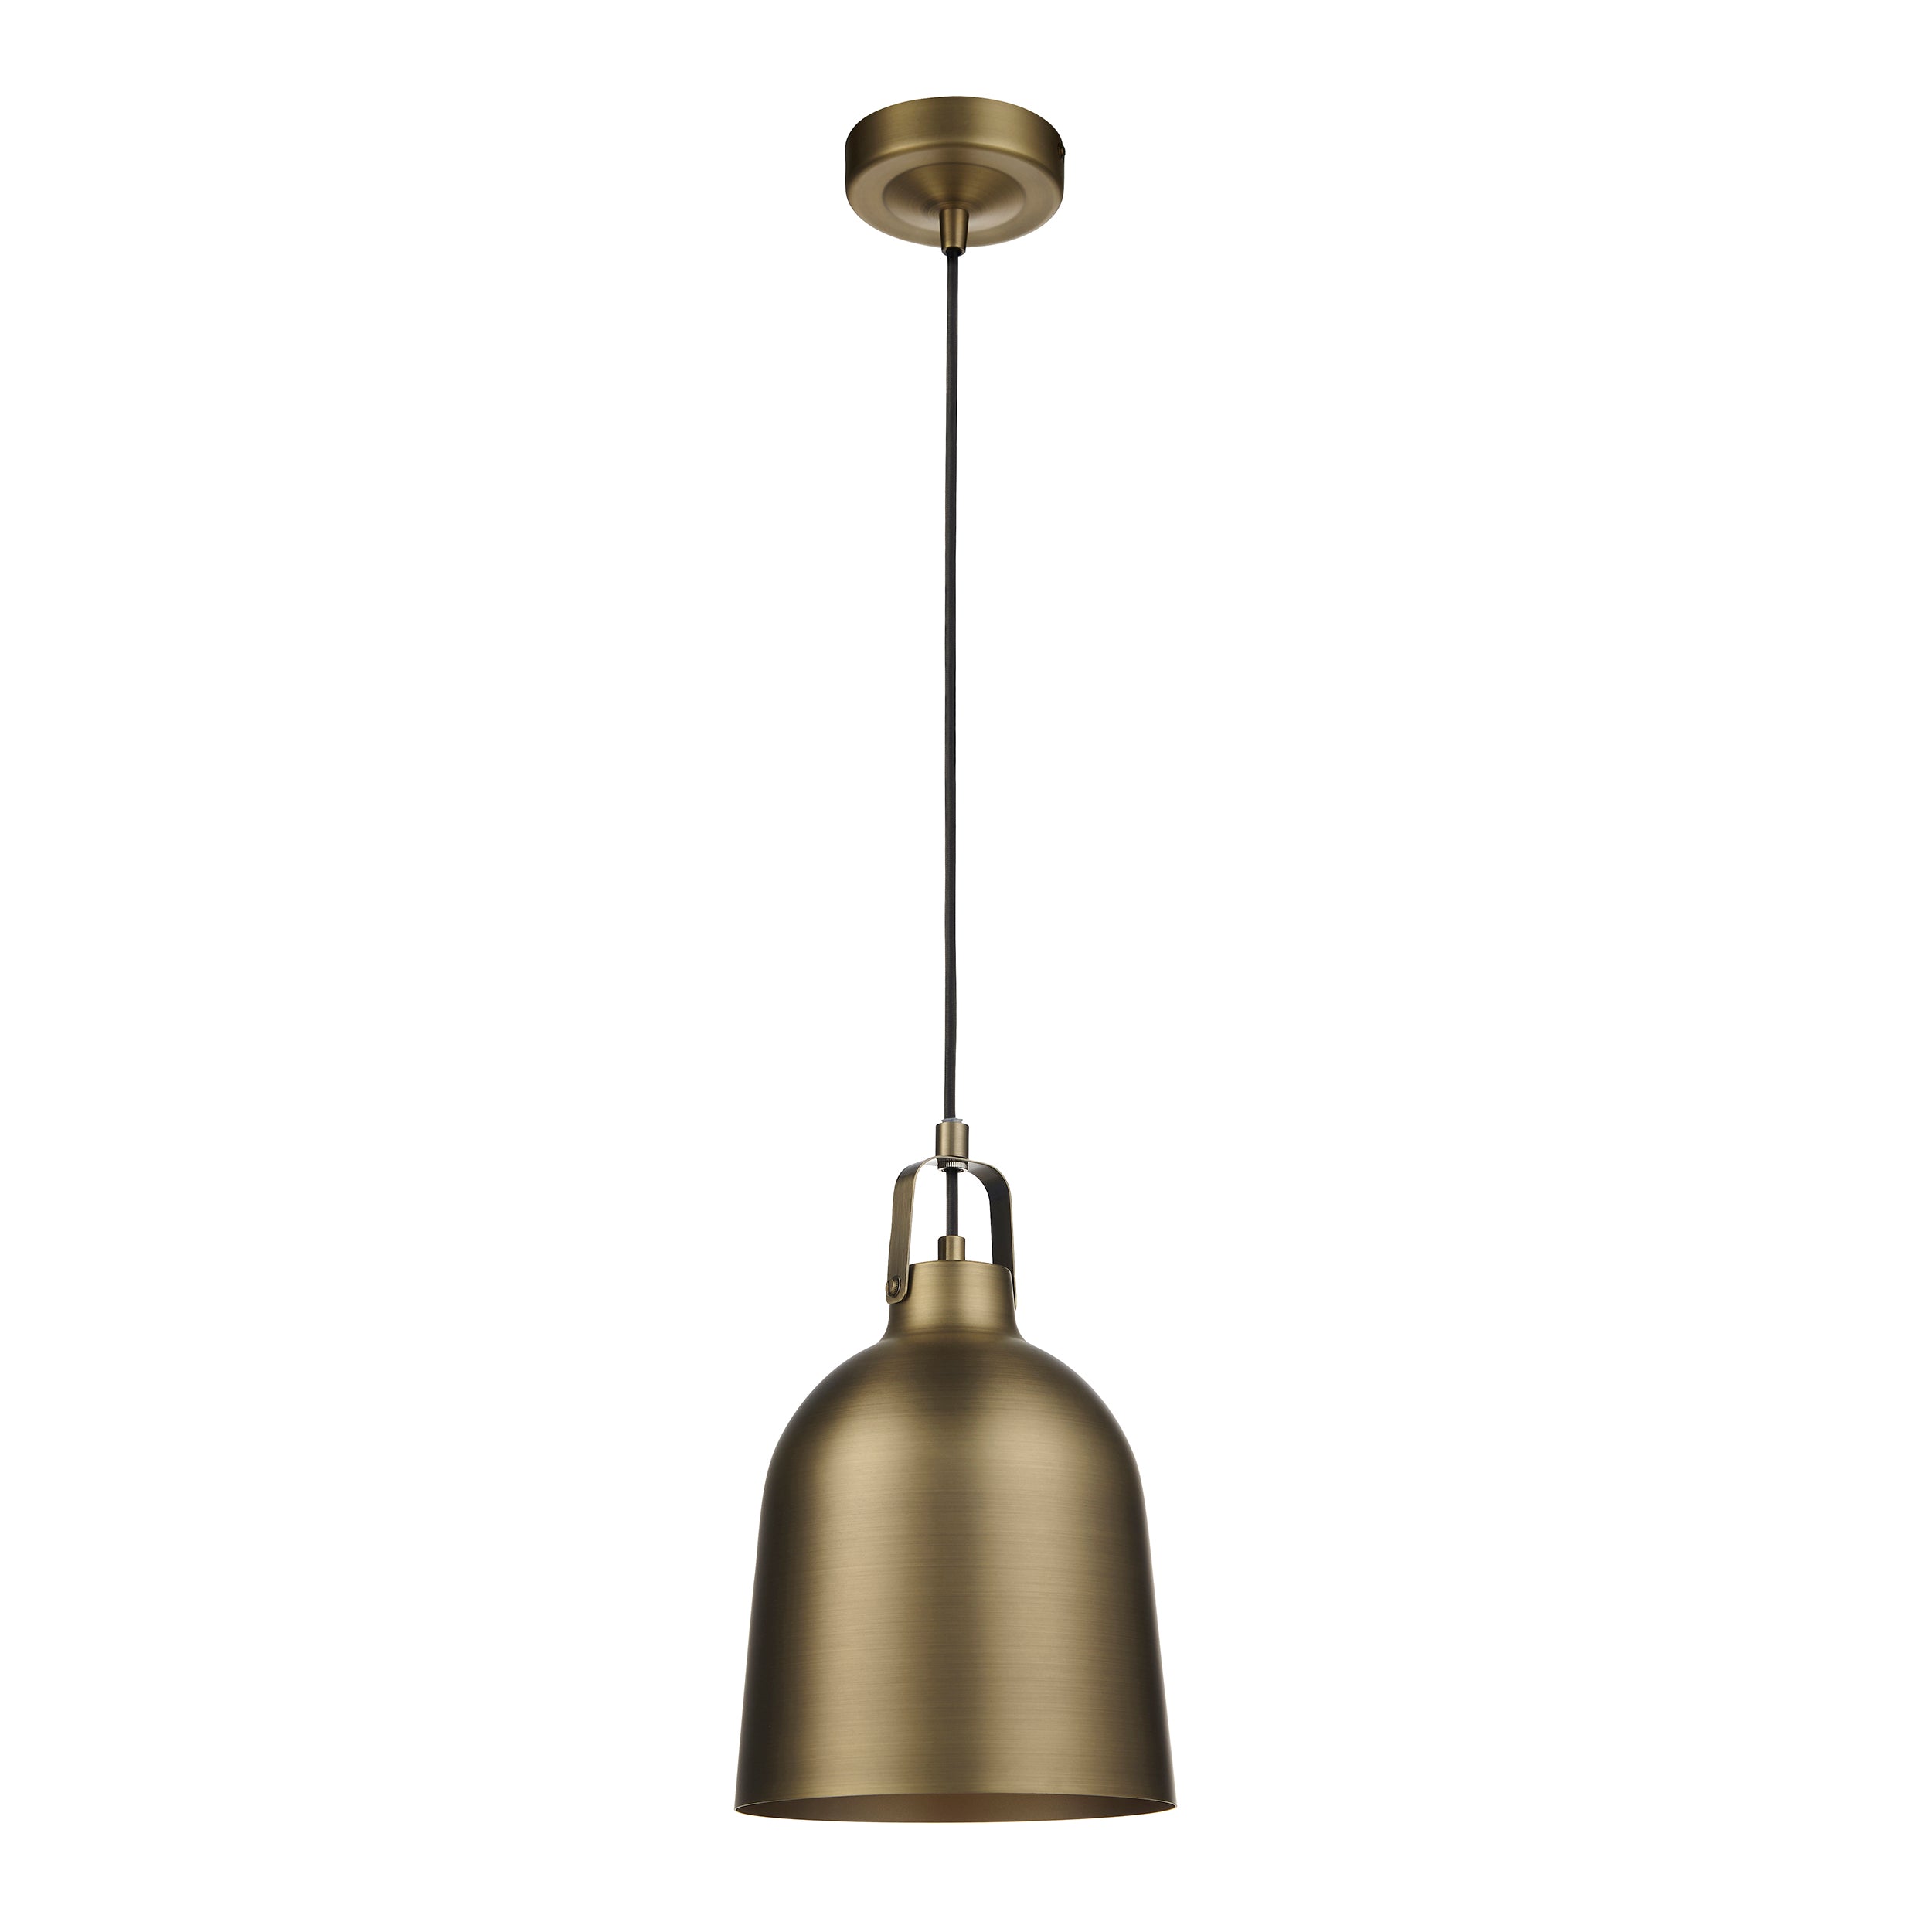 Lazenby Industrial Style Dark Antique Brass Pendant Light